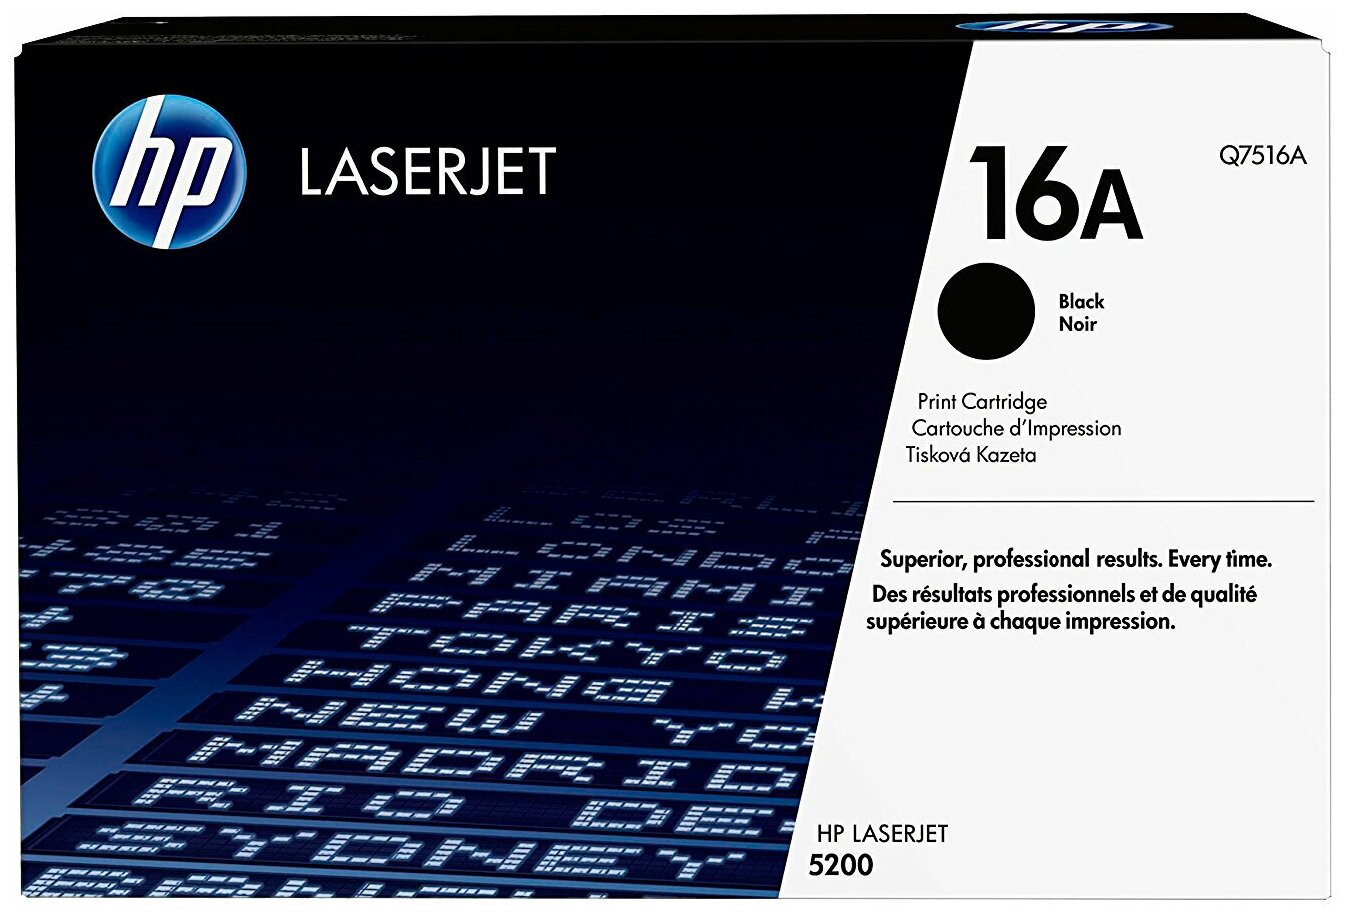 Расходный материал HP LaserJet Q7516A Black Print Cartridge Q7516A